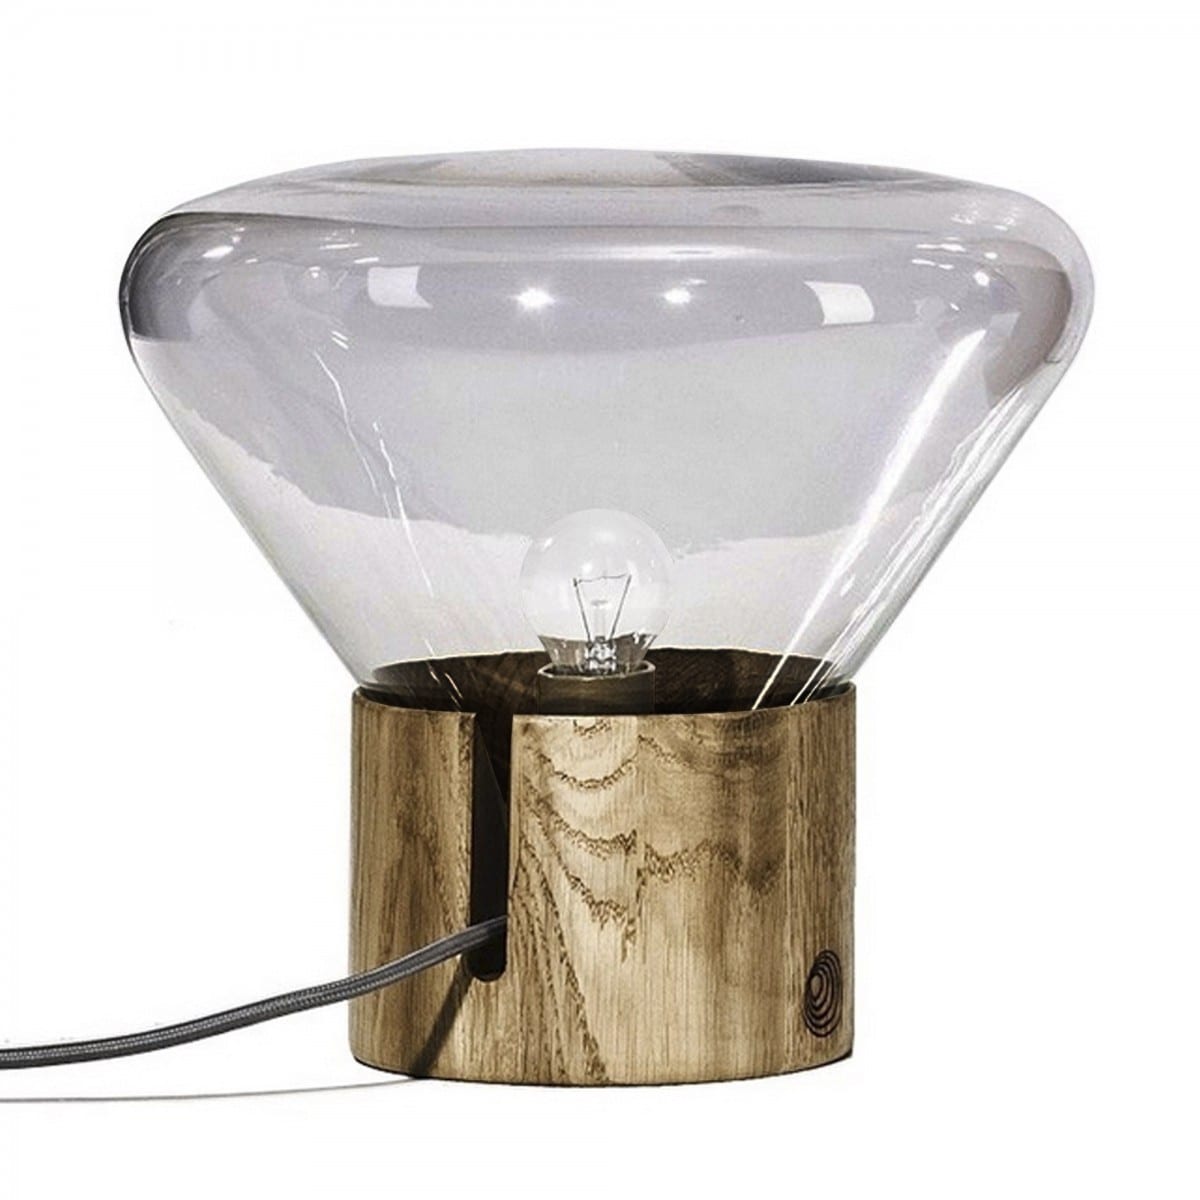 Lampe-a-poser-Brokis-MINI-MUFFINS-Lampe-a-poser-LED-Chene-Verre-gris-H26cm-18819-598